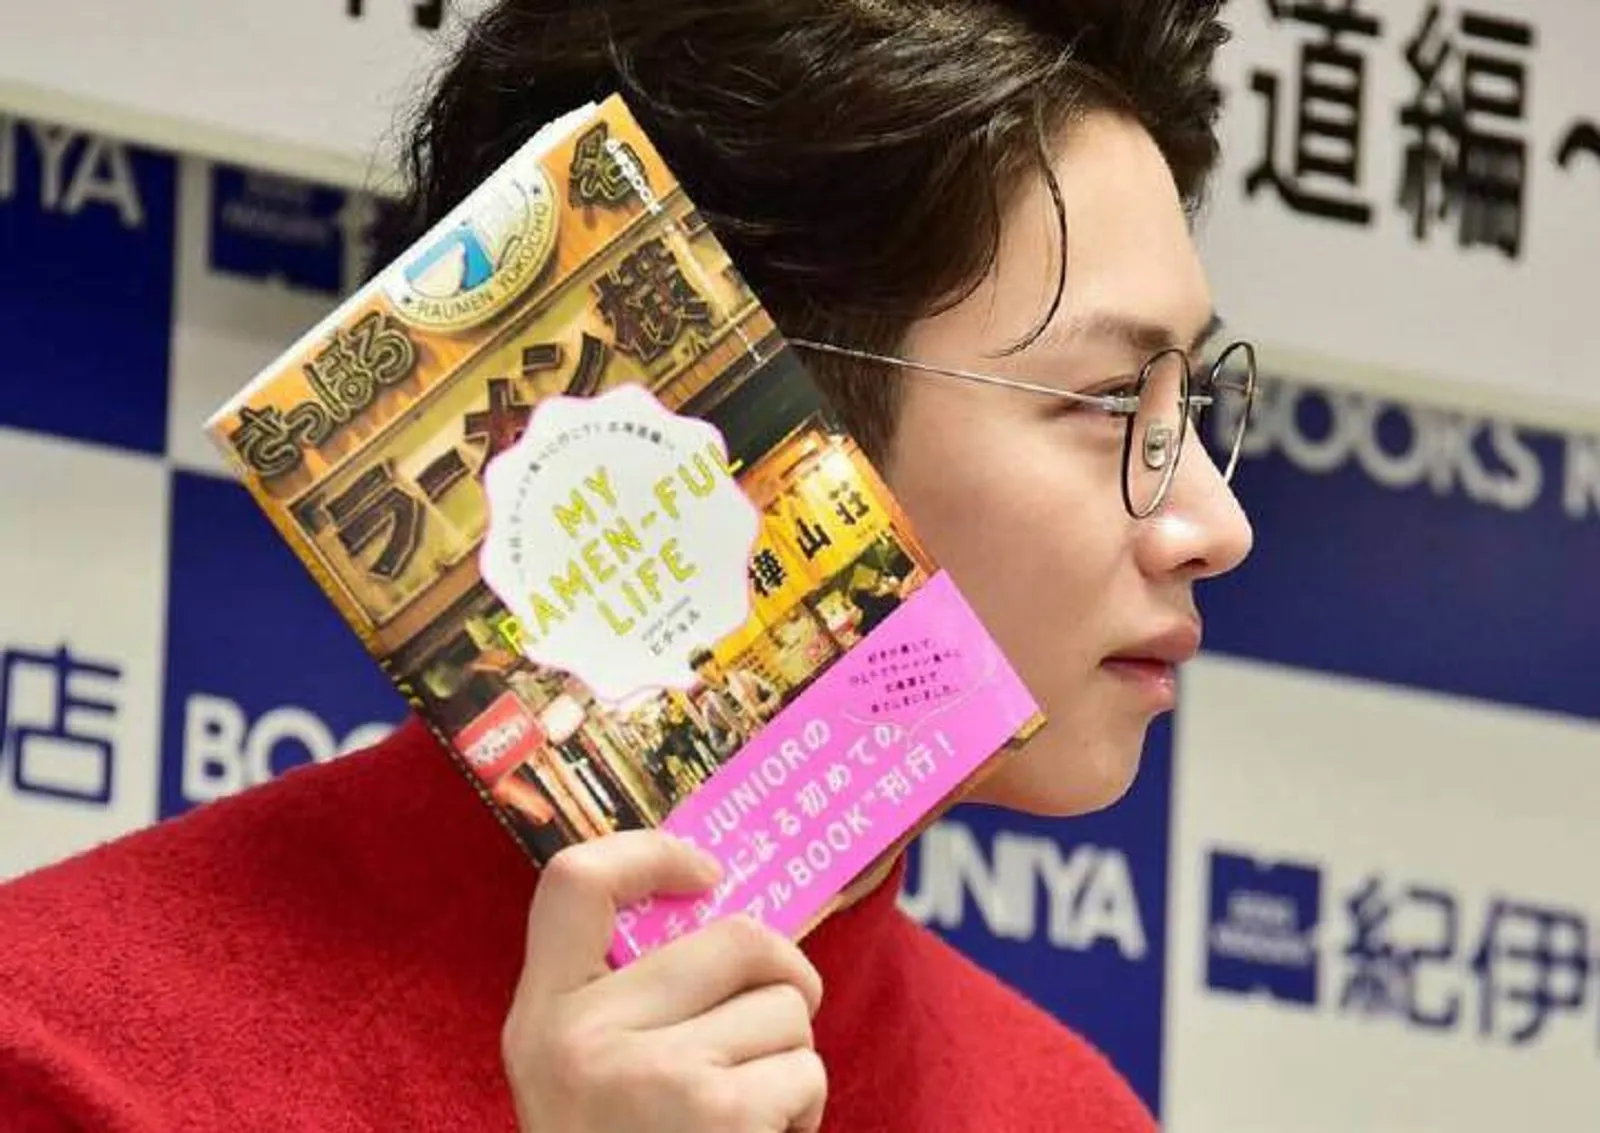 Deretan Judul Buku Ini Ditulis Oleh Idola Pop Korea